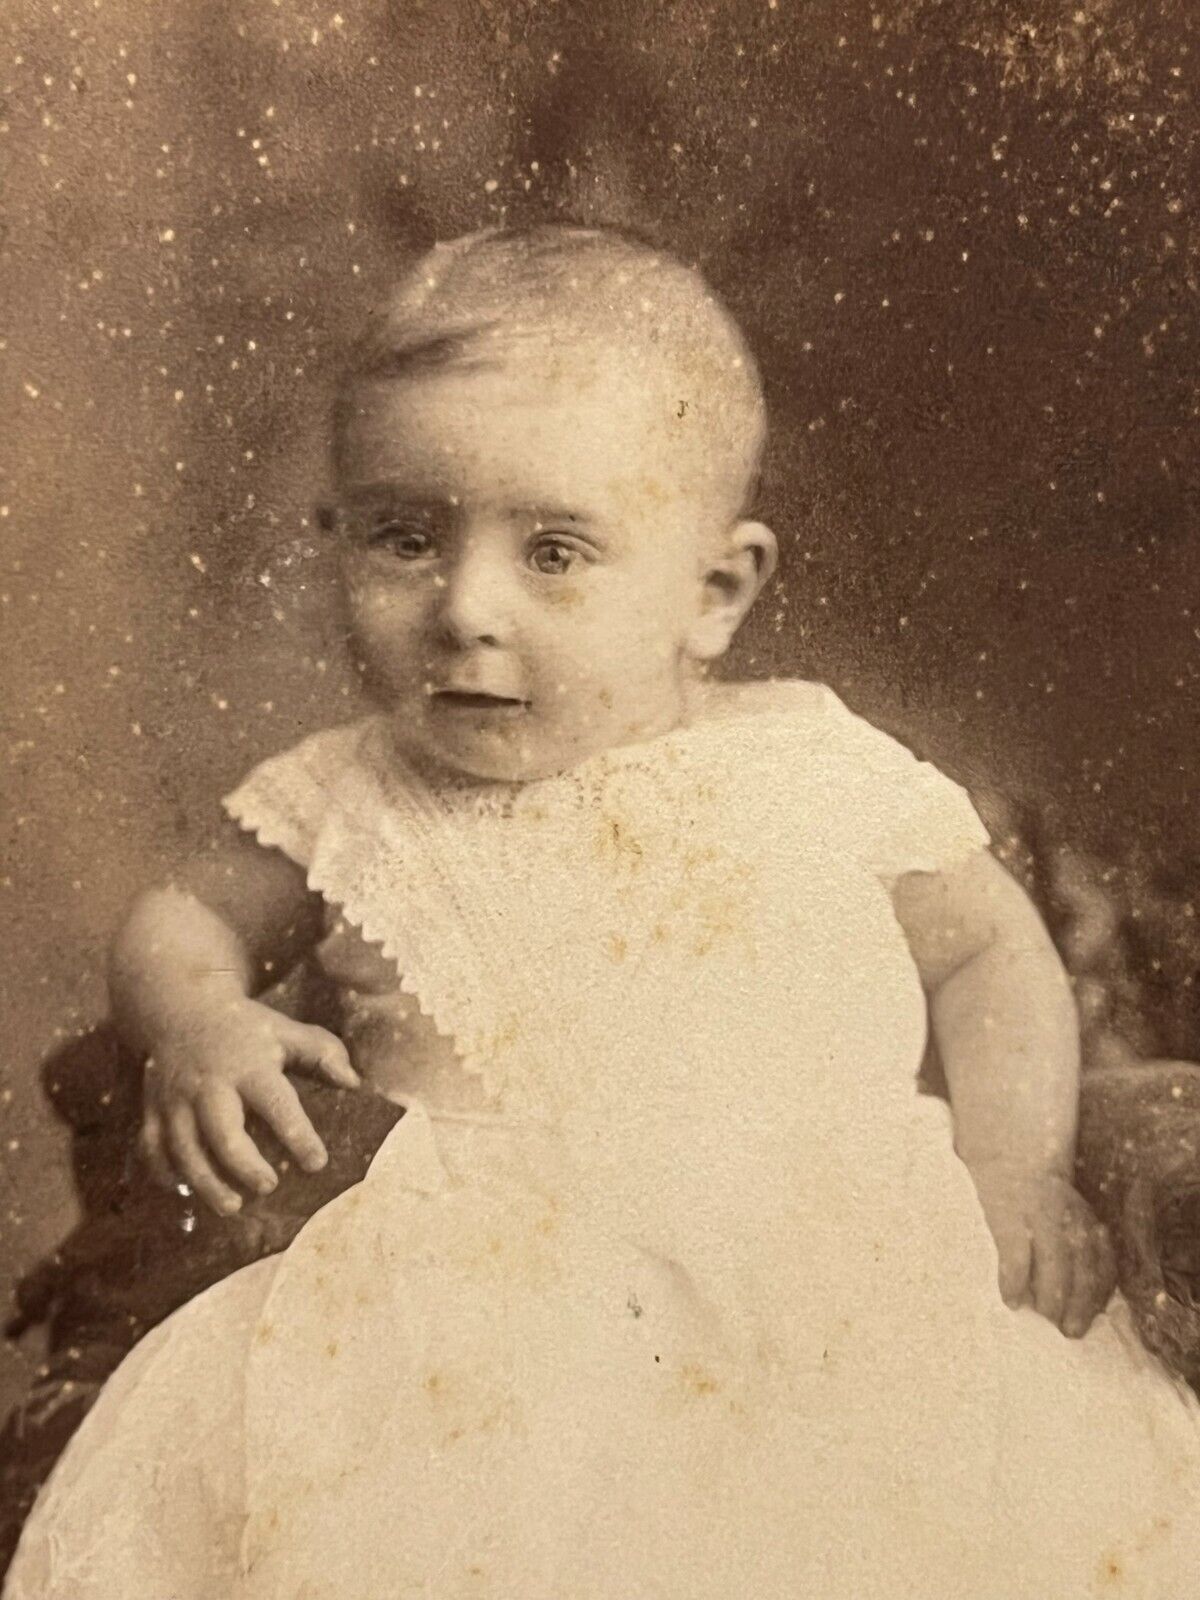 Wheeling West Virginia Cabinet Photo ID\'d Vincent Keller Baby Boy c.1890